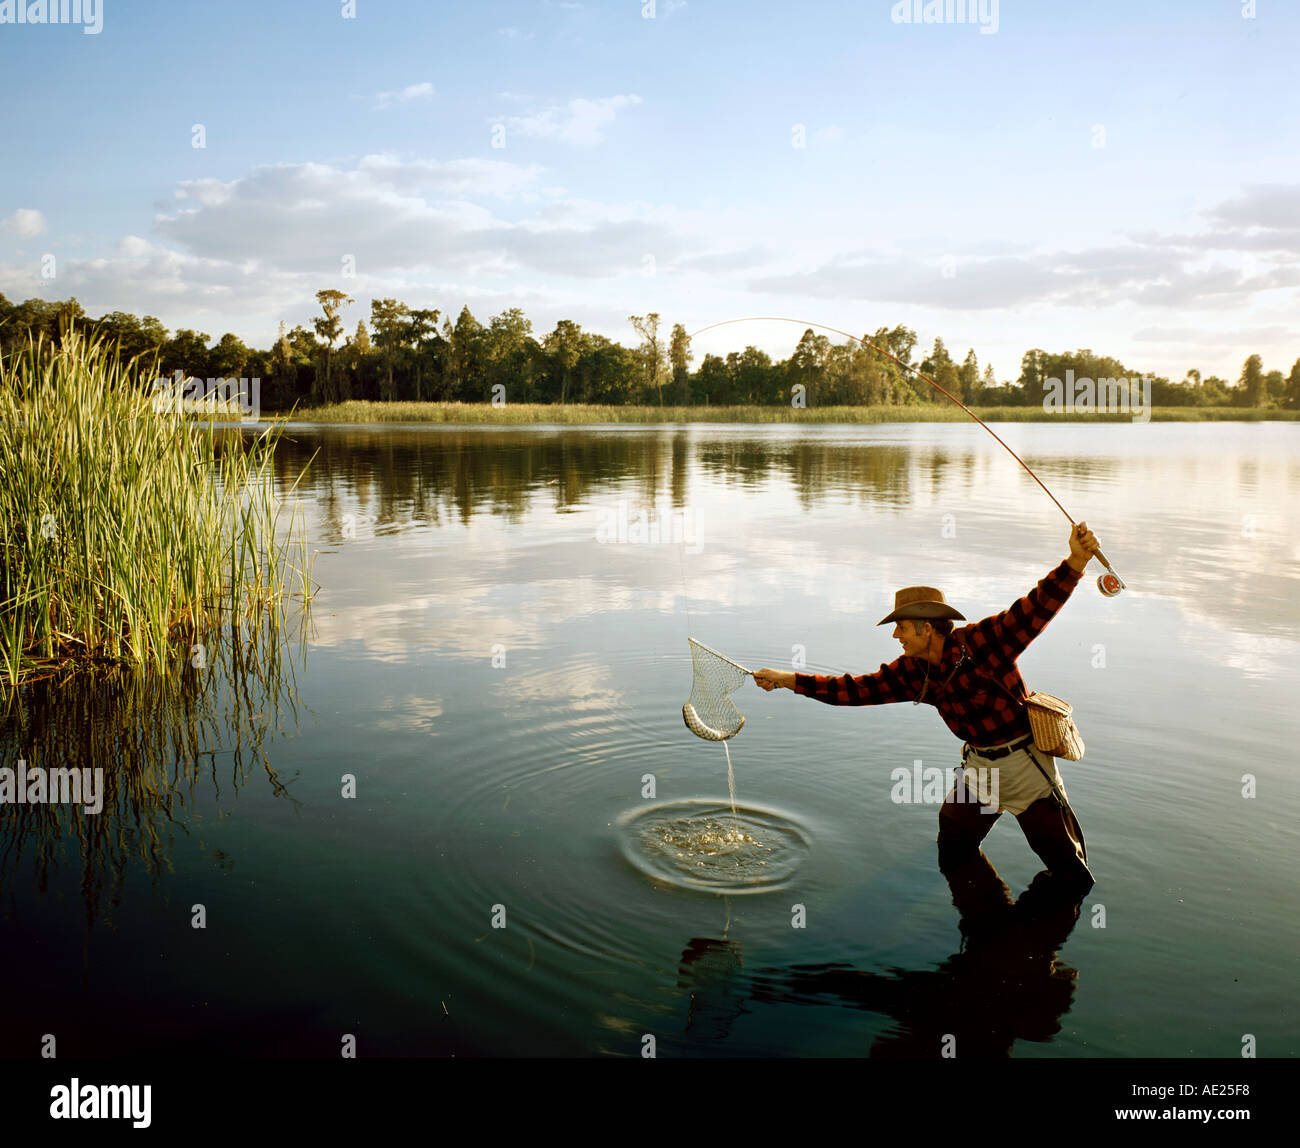 fisherman netting fish in Florida lake Stock Photo